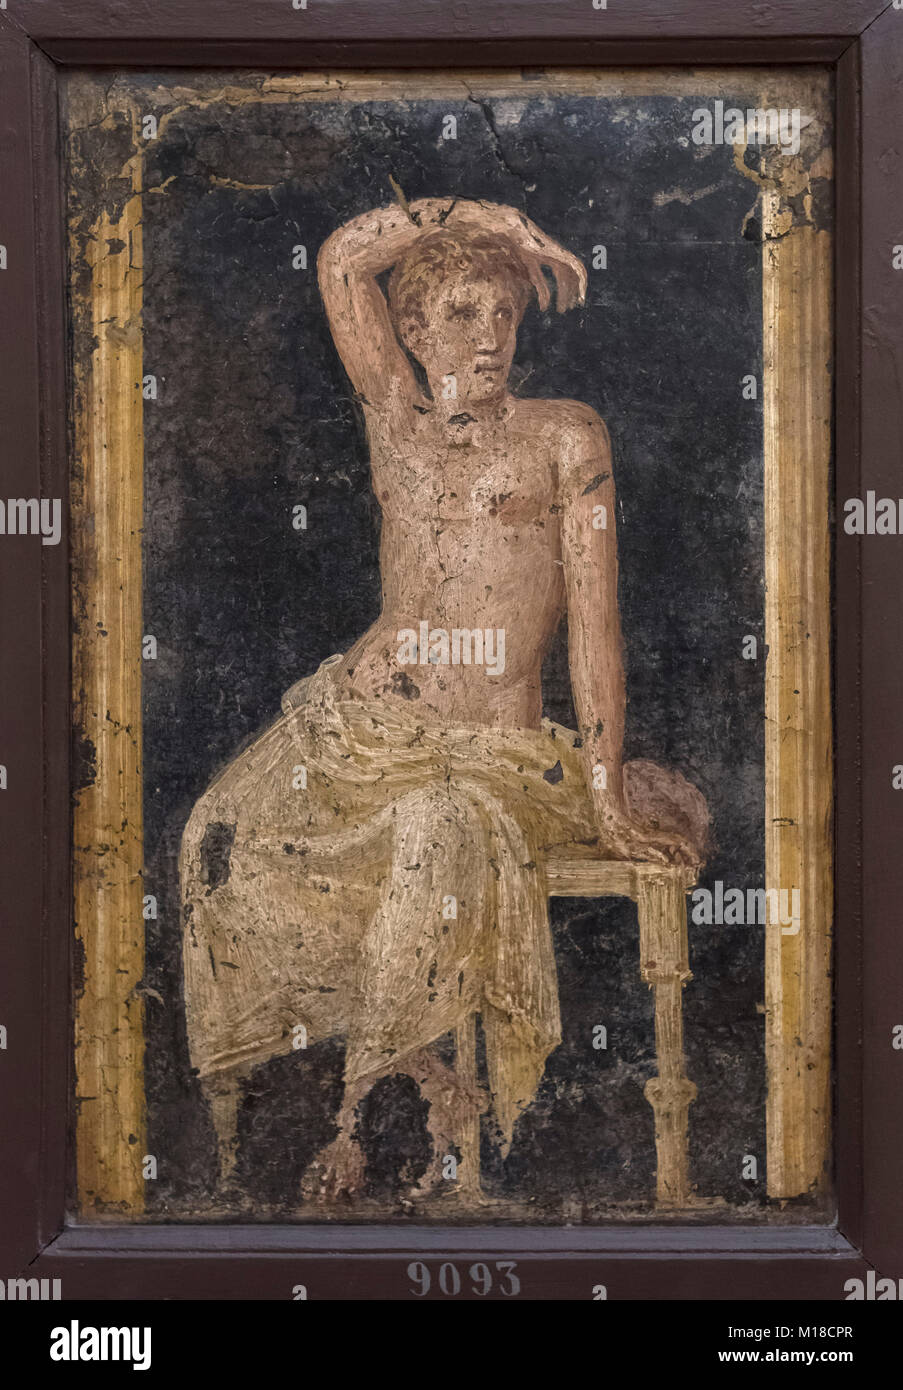 Neapel. Italien. Porträt eines jungen Mannes ruht, 1. Jh. N.CHR. Museo Archeologico Nazionale di Napoli. Neapel Nationalen Archäologischen Museum. Stockfoto